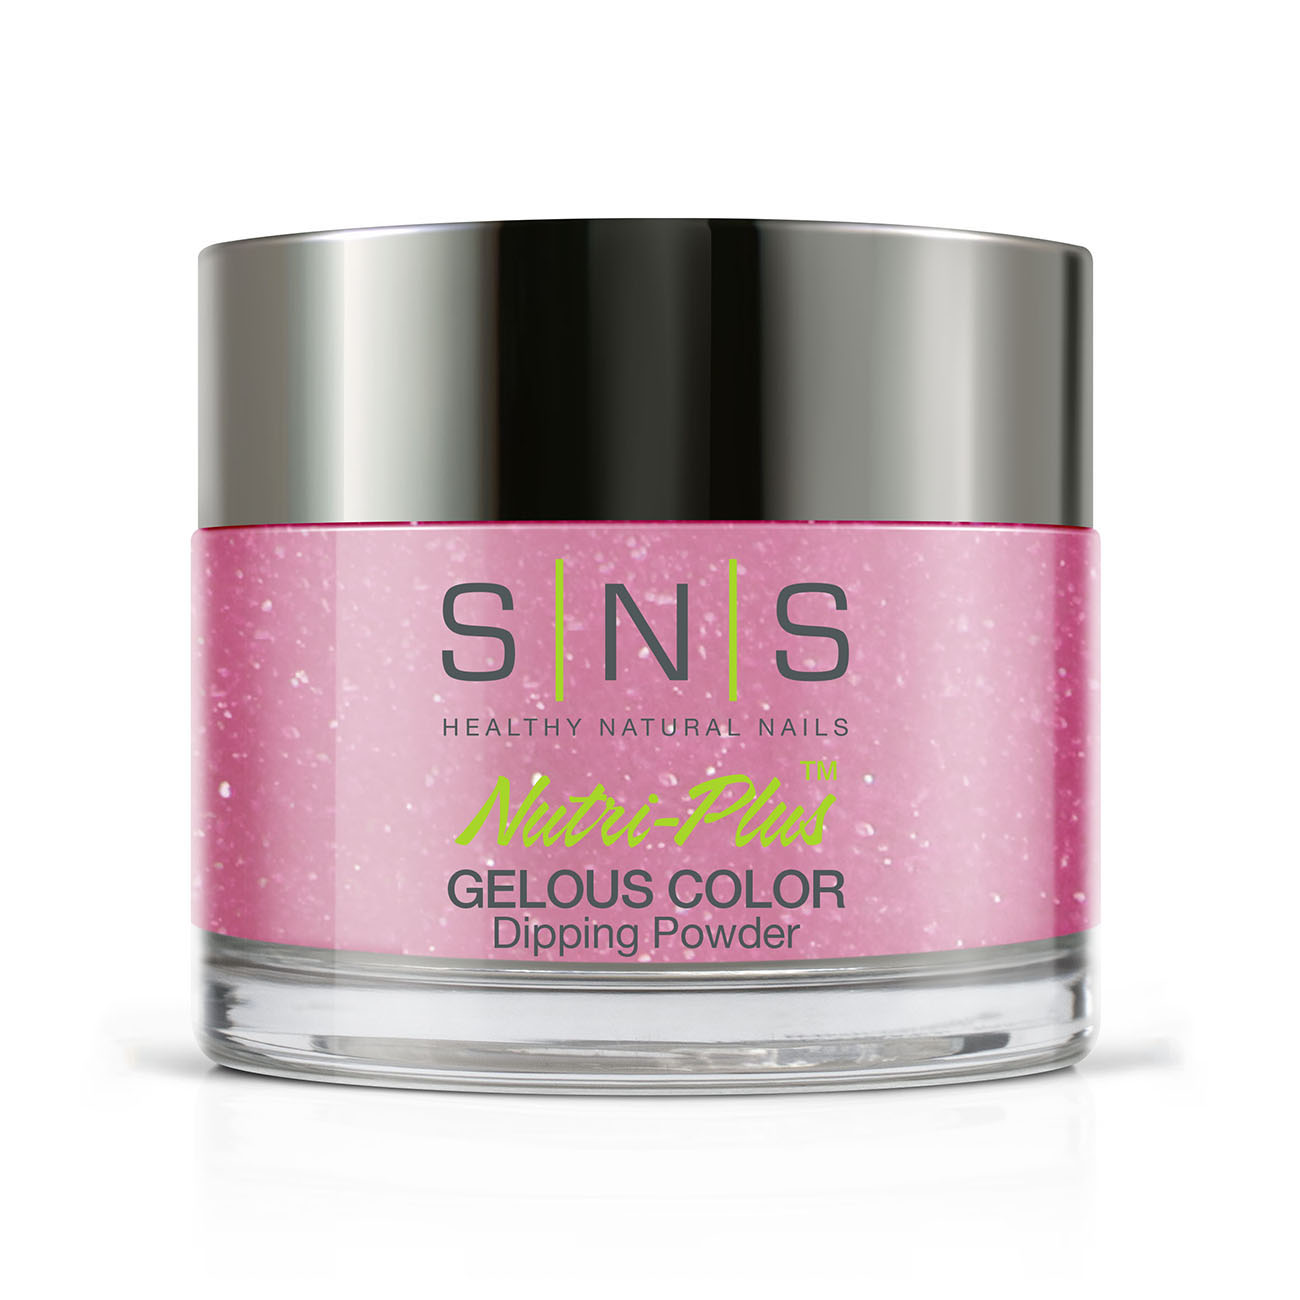 SNS Nails SC03 Honey Boo Boo 28g (1oz) | Gelous Dipping Powder